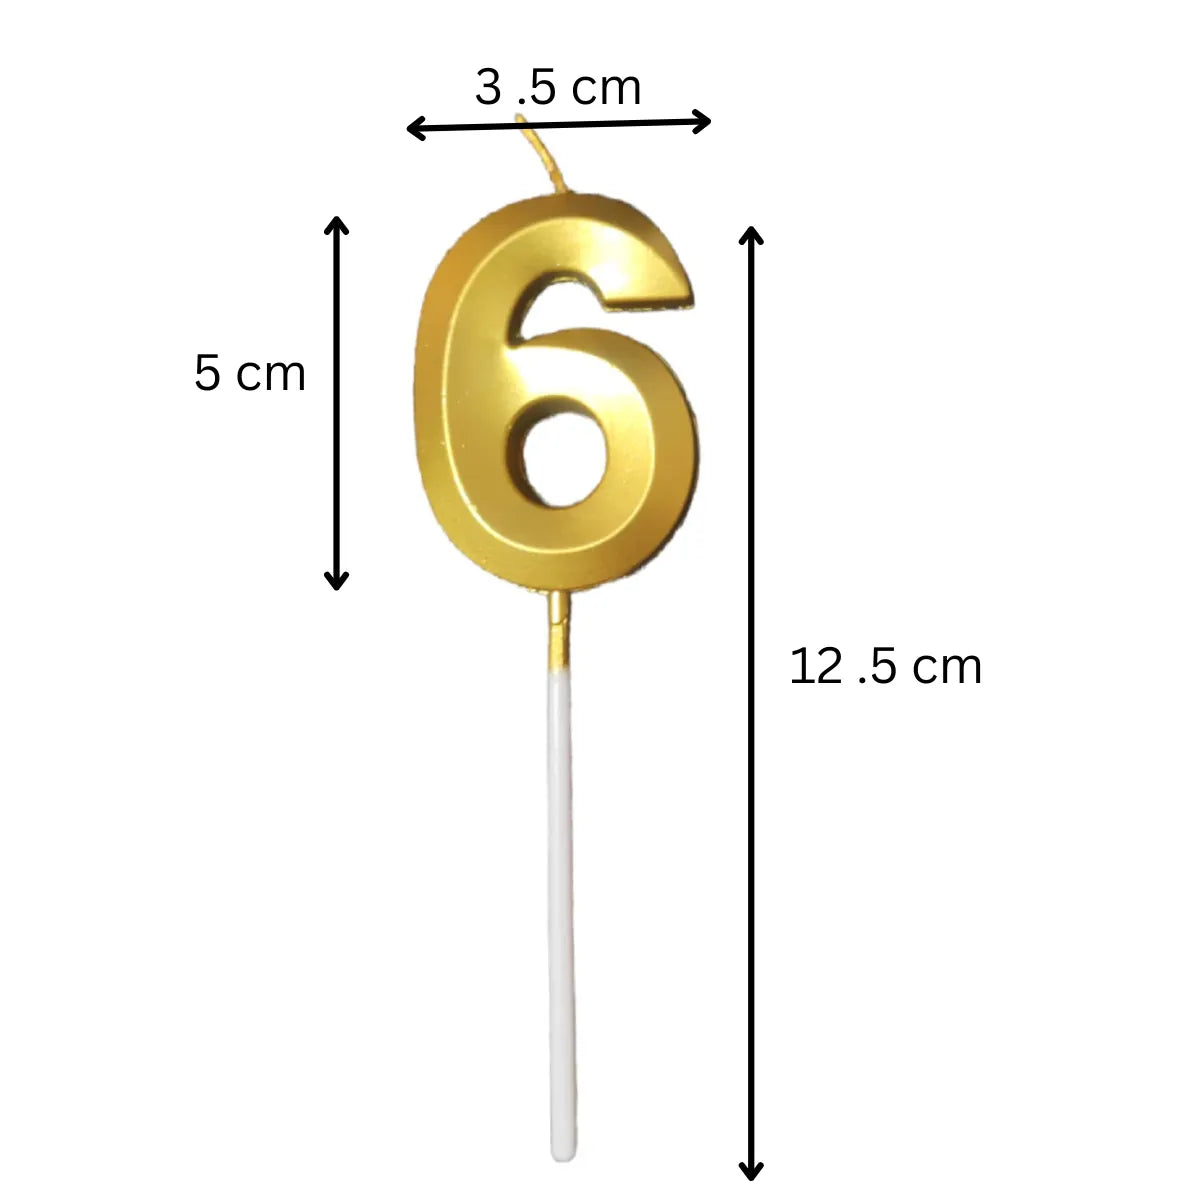 6 Six Golden Number Candle - thebakingtools.com